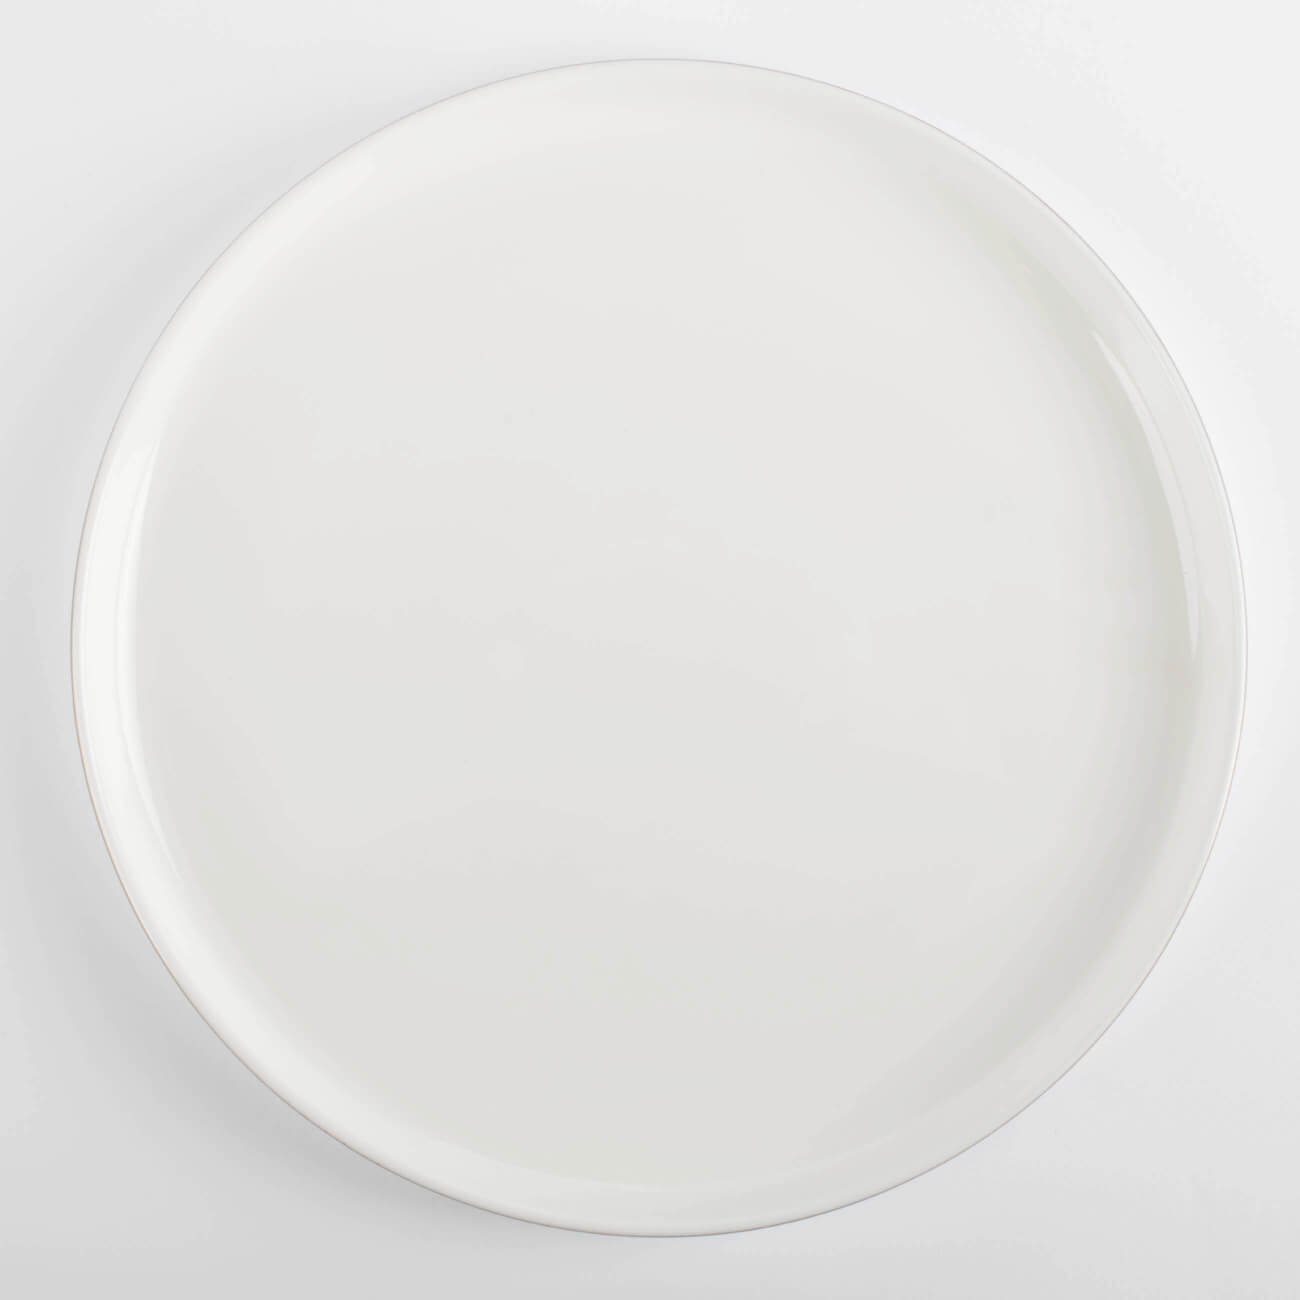 Тарелка обеденная, 26 см, фарфор F, белая, Ideal gold керамическая обеденная тарелка perfecto linea